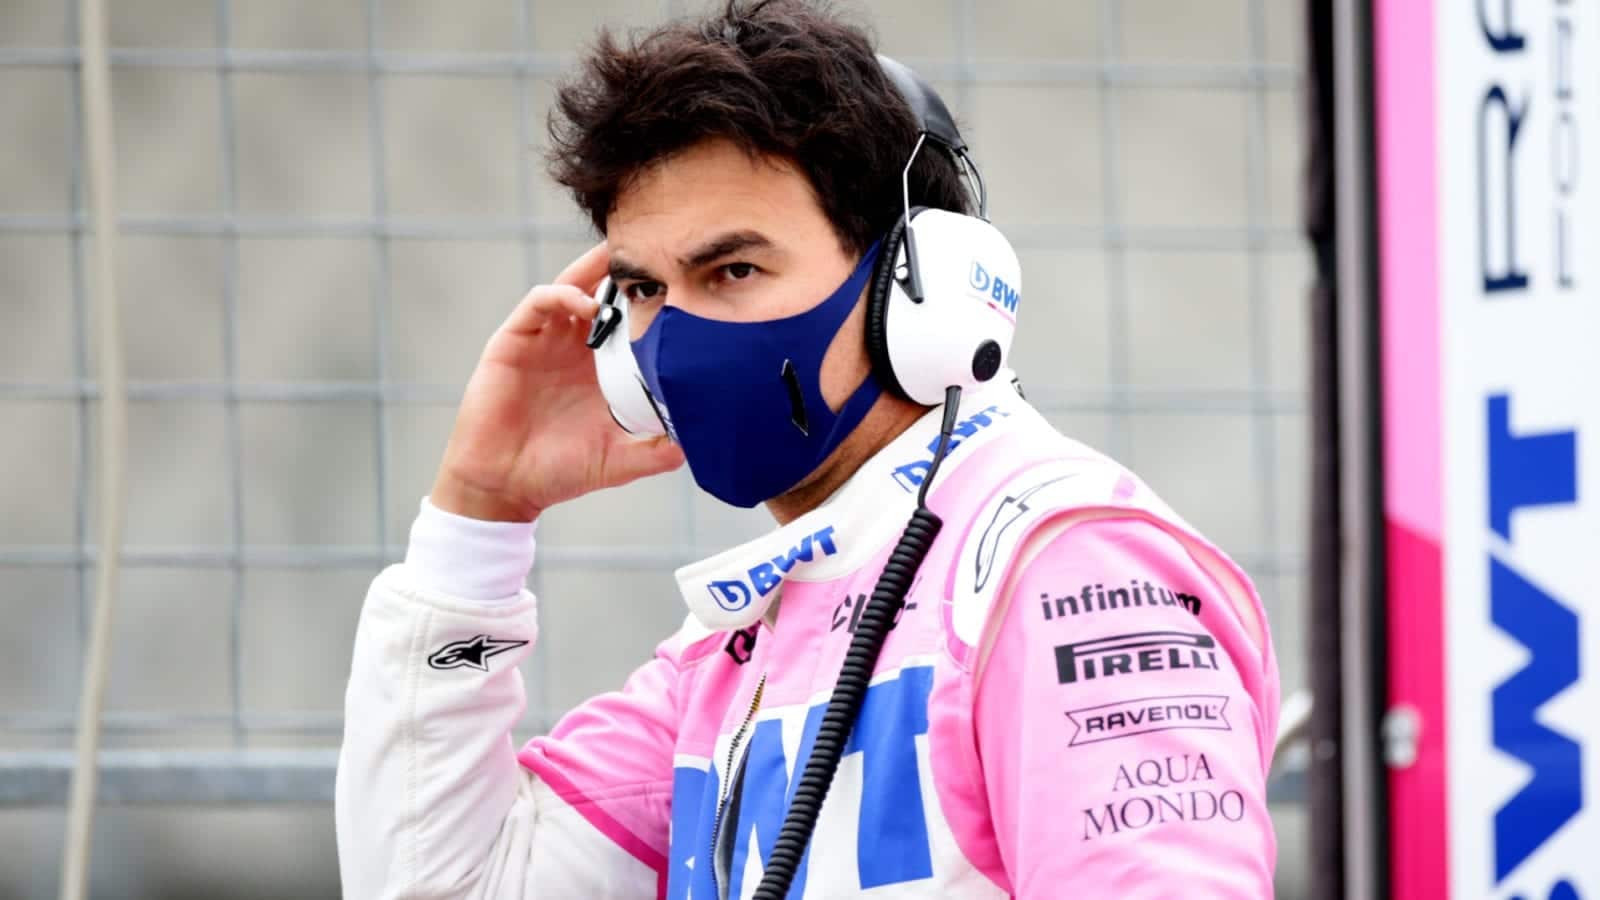 Sergio Perez, Hungarian GP Practice 2020